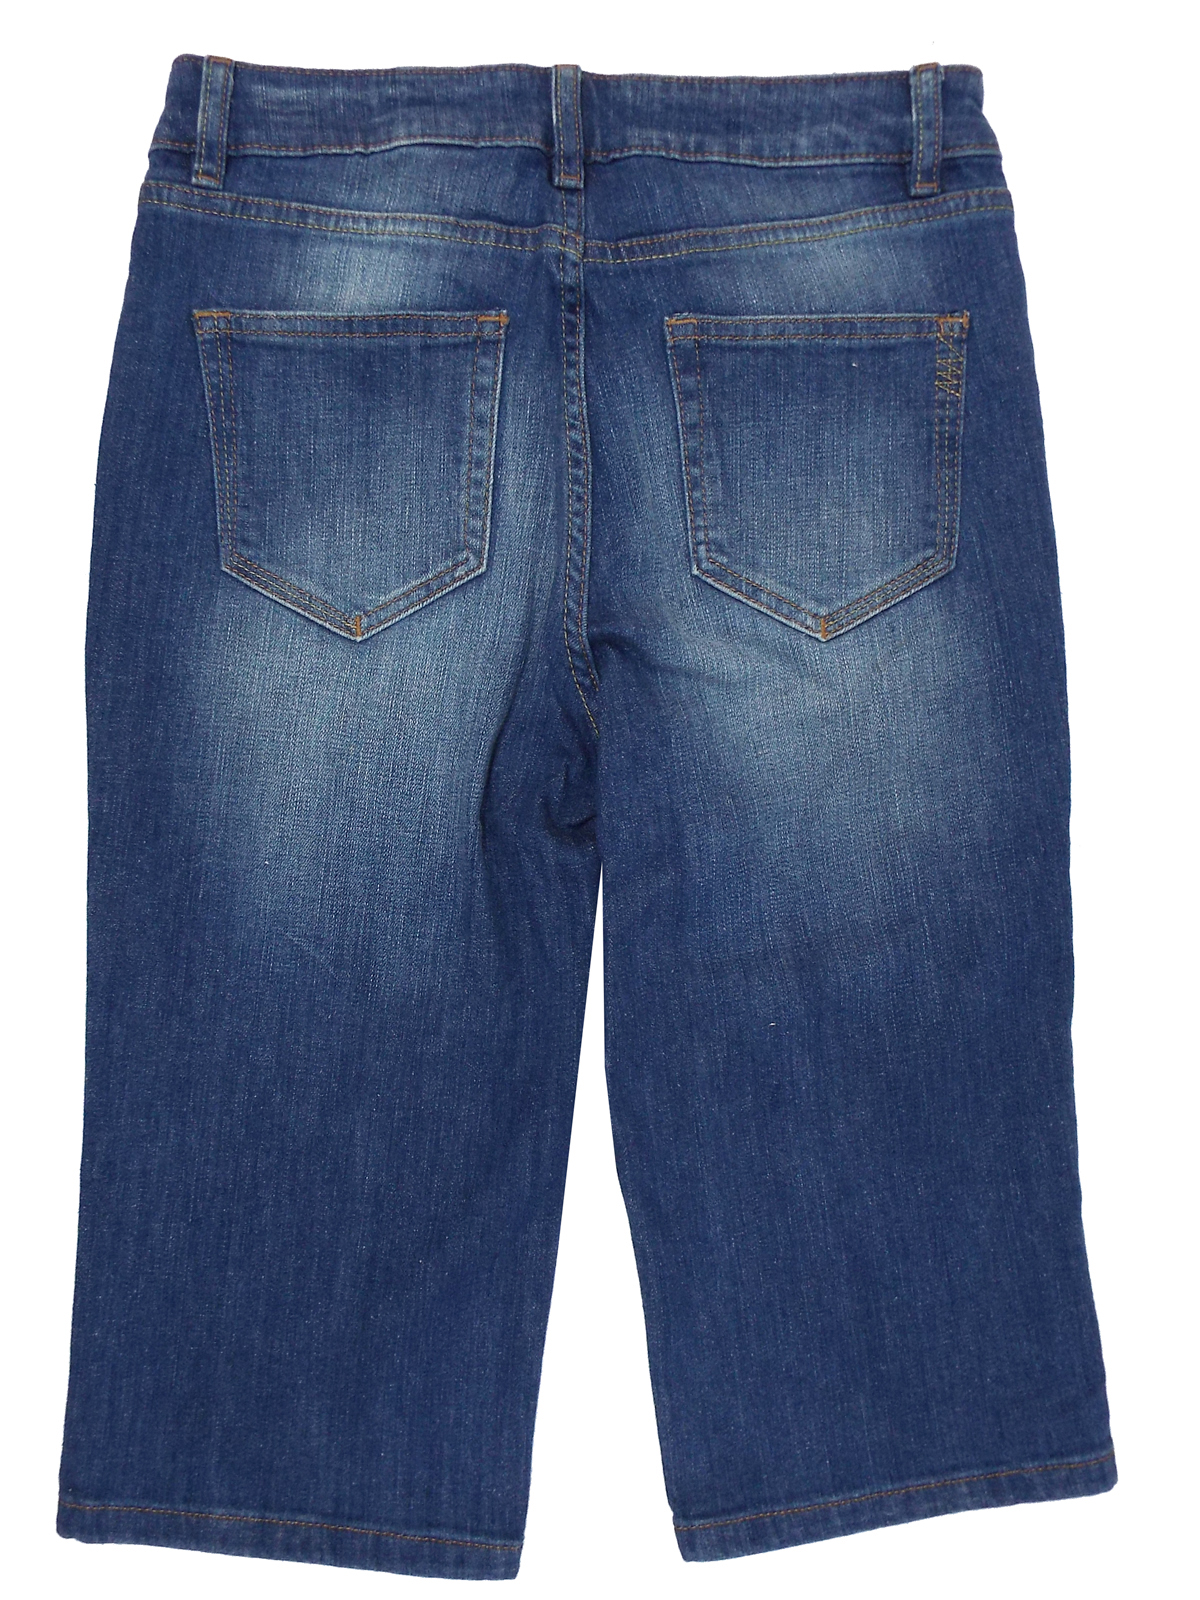 N3XT MID-BLUE Cotton Rich Denim Knee Shorts - Size 6 to 22